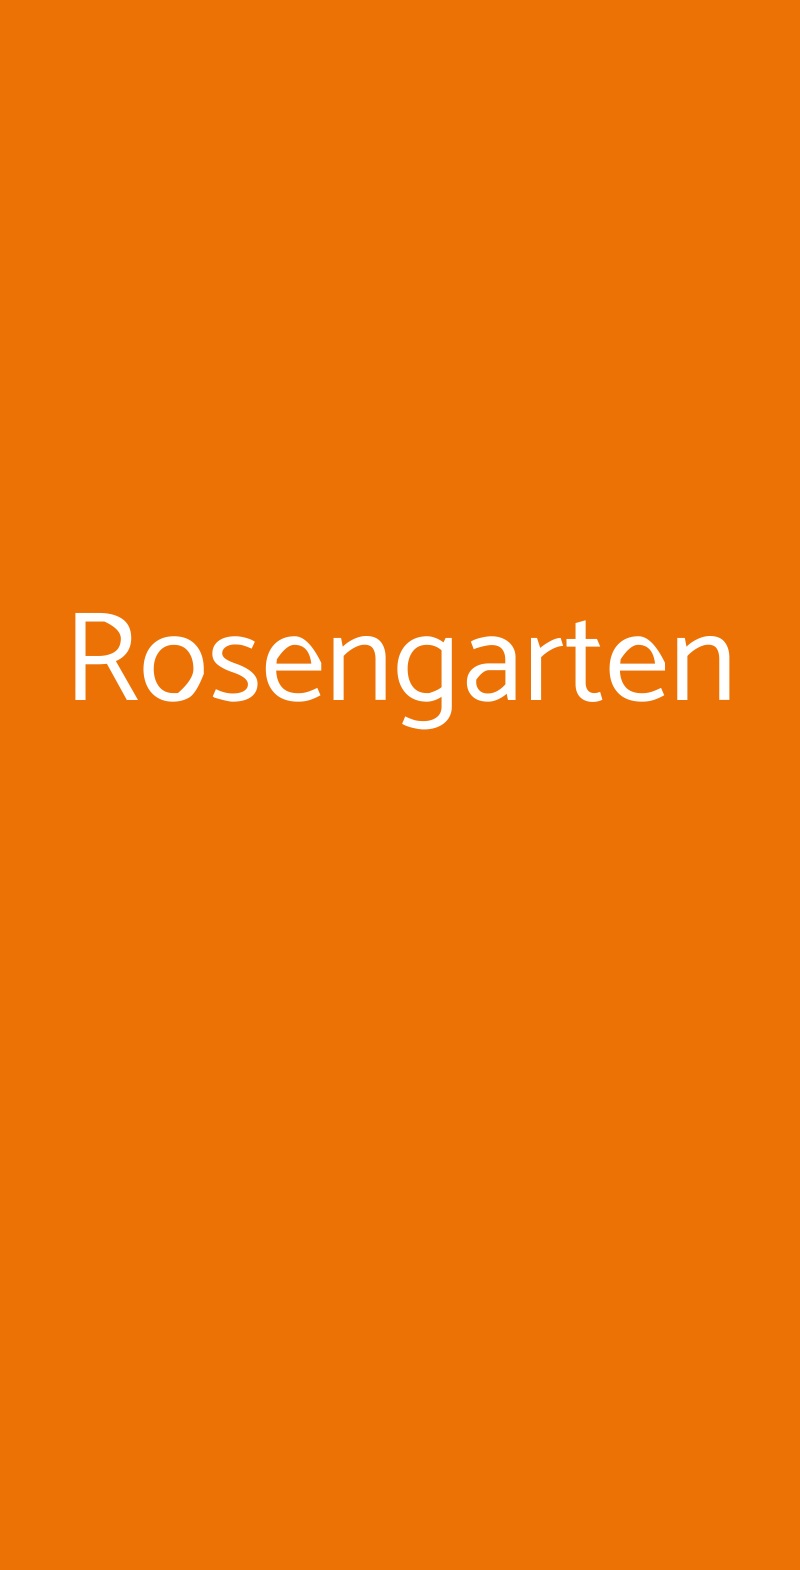 Rosengarten Albiano D'ivrea menù 1 pagina